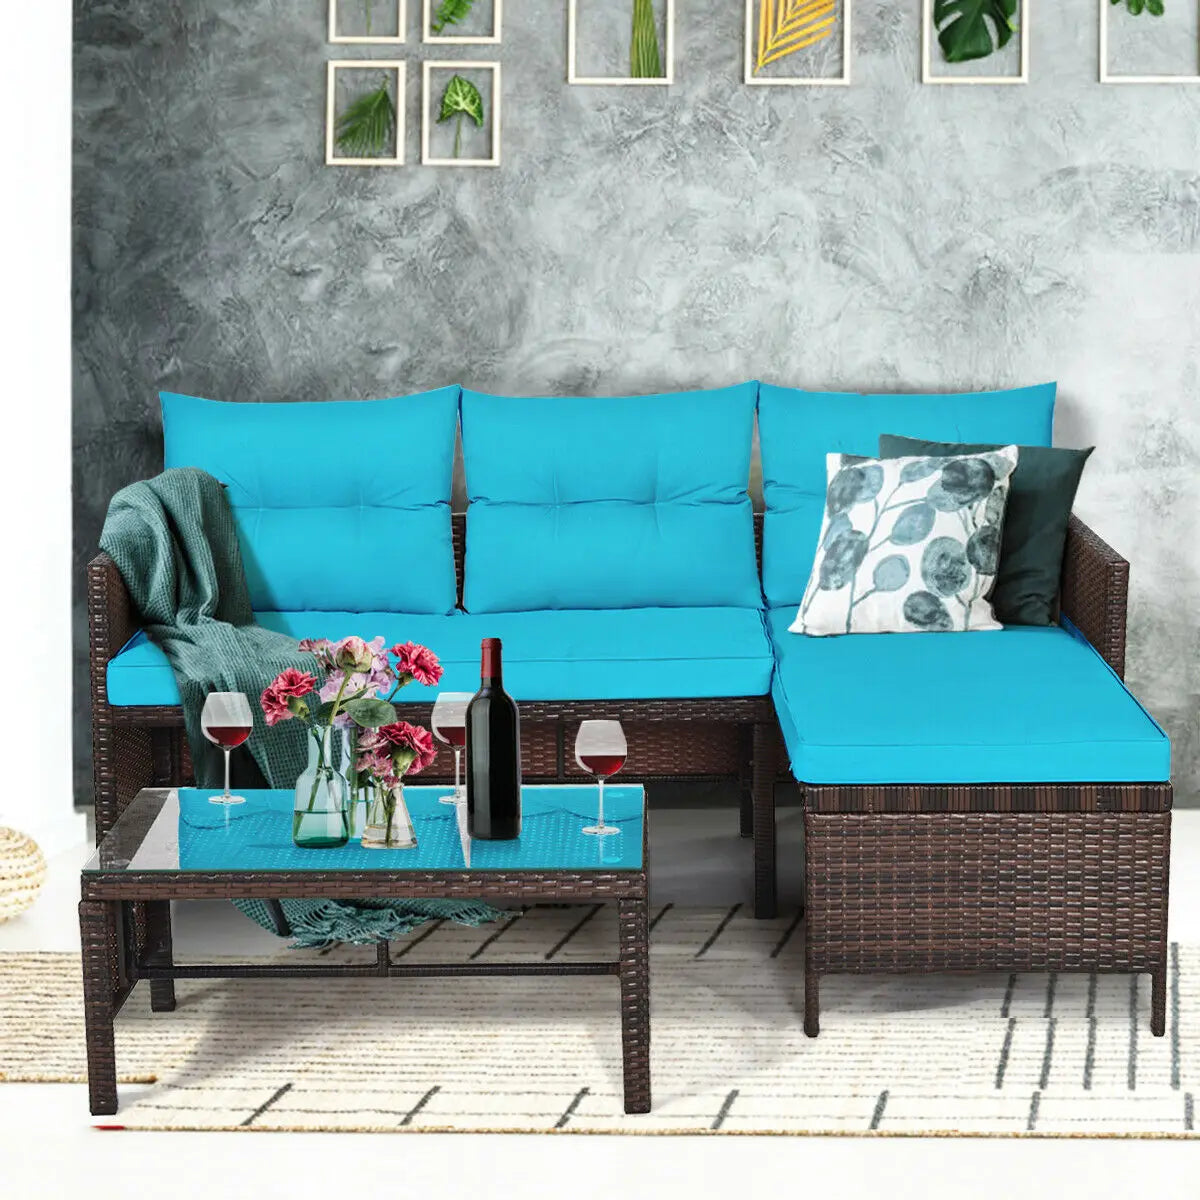 3 Piece Patio Rattan Wicker Sofa Sectional Set